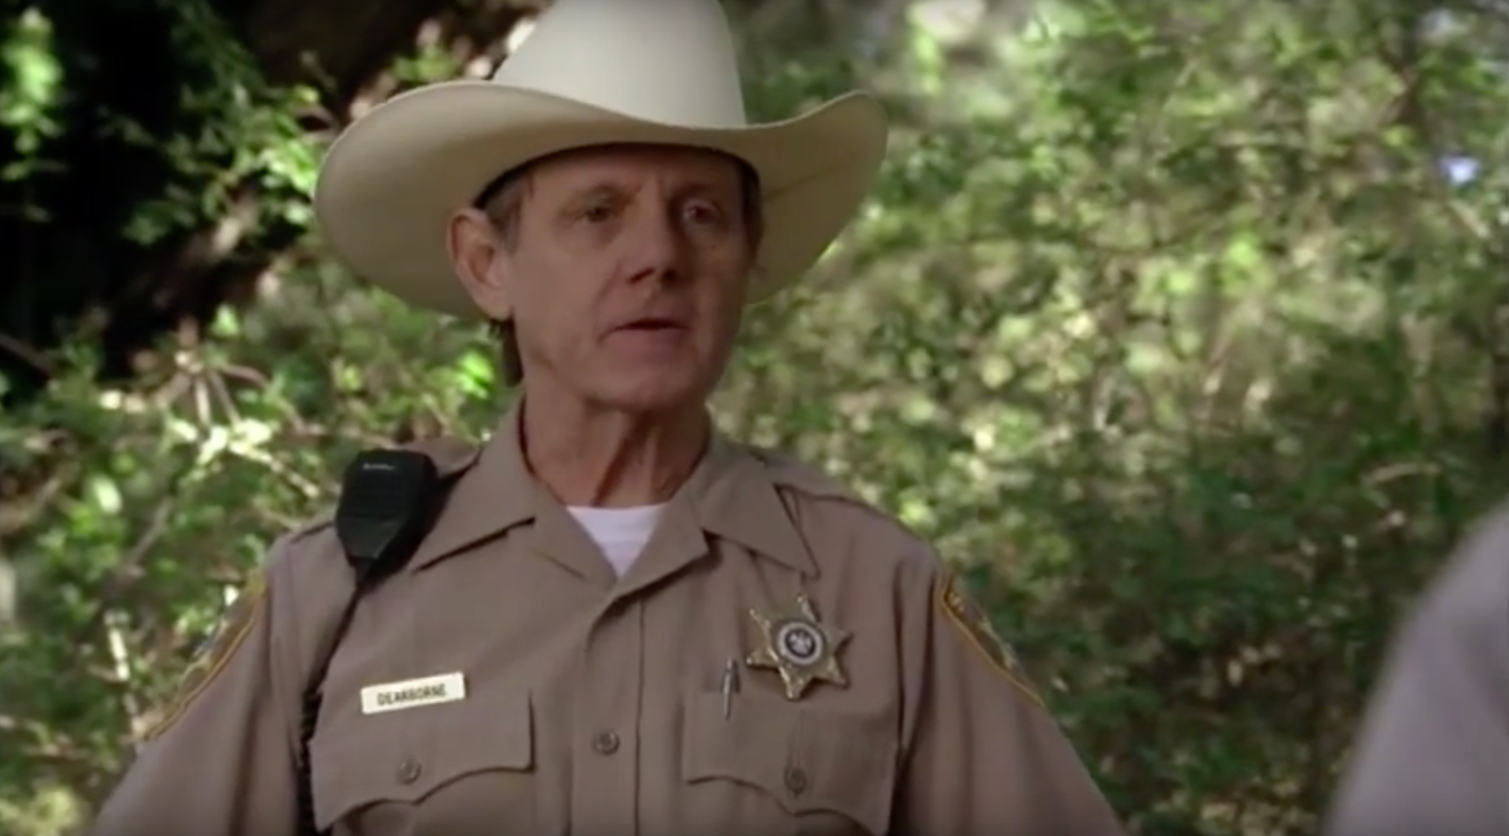 Sheriff Bud Dearborne